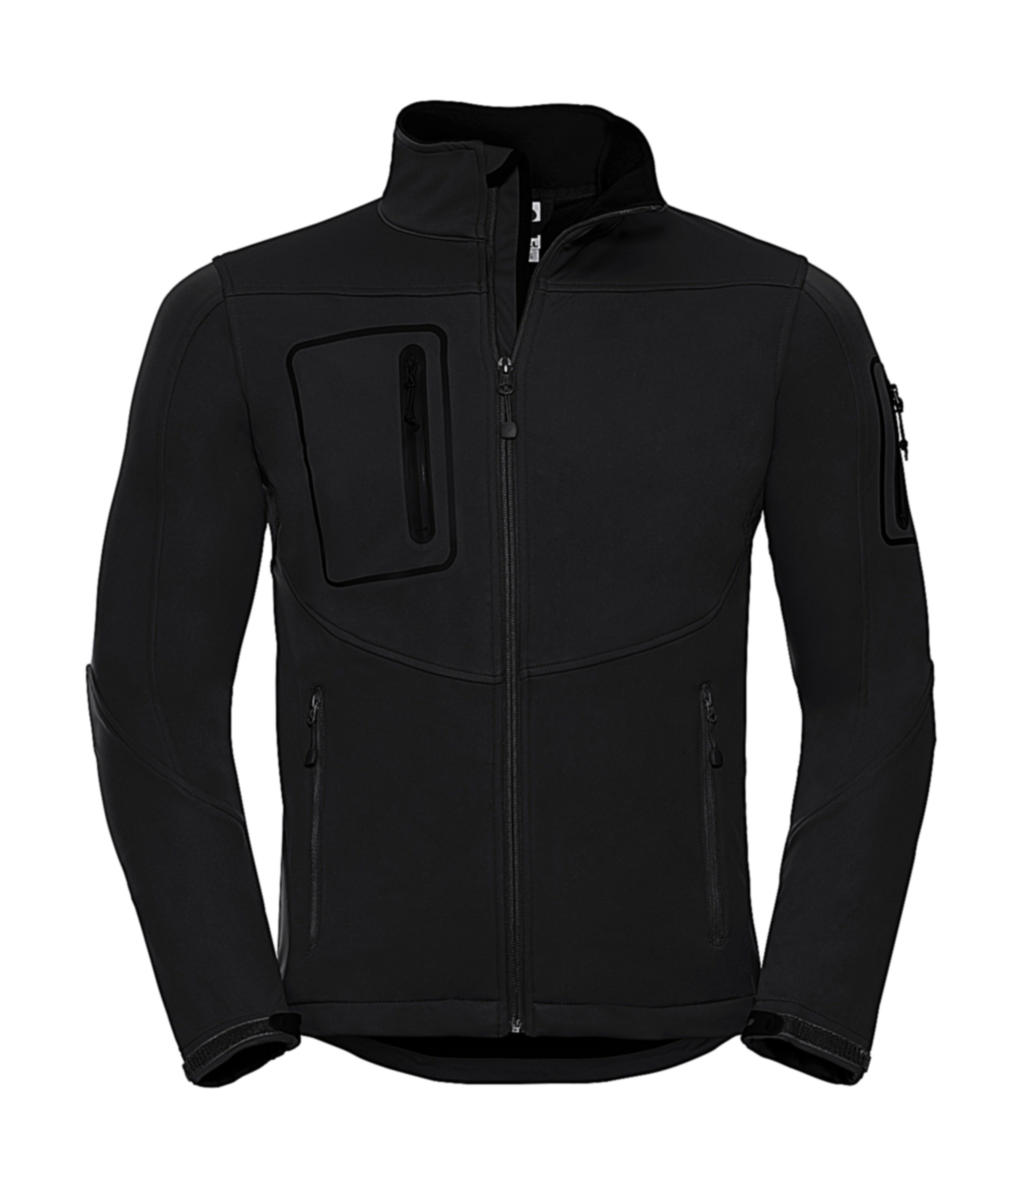  Mens Sportshell 5000 Jacket in Farbe Black